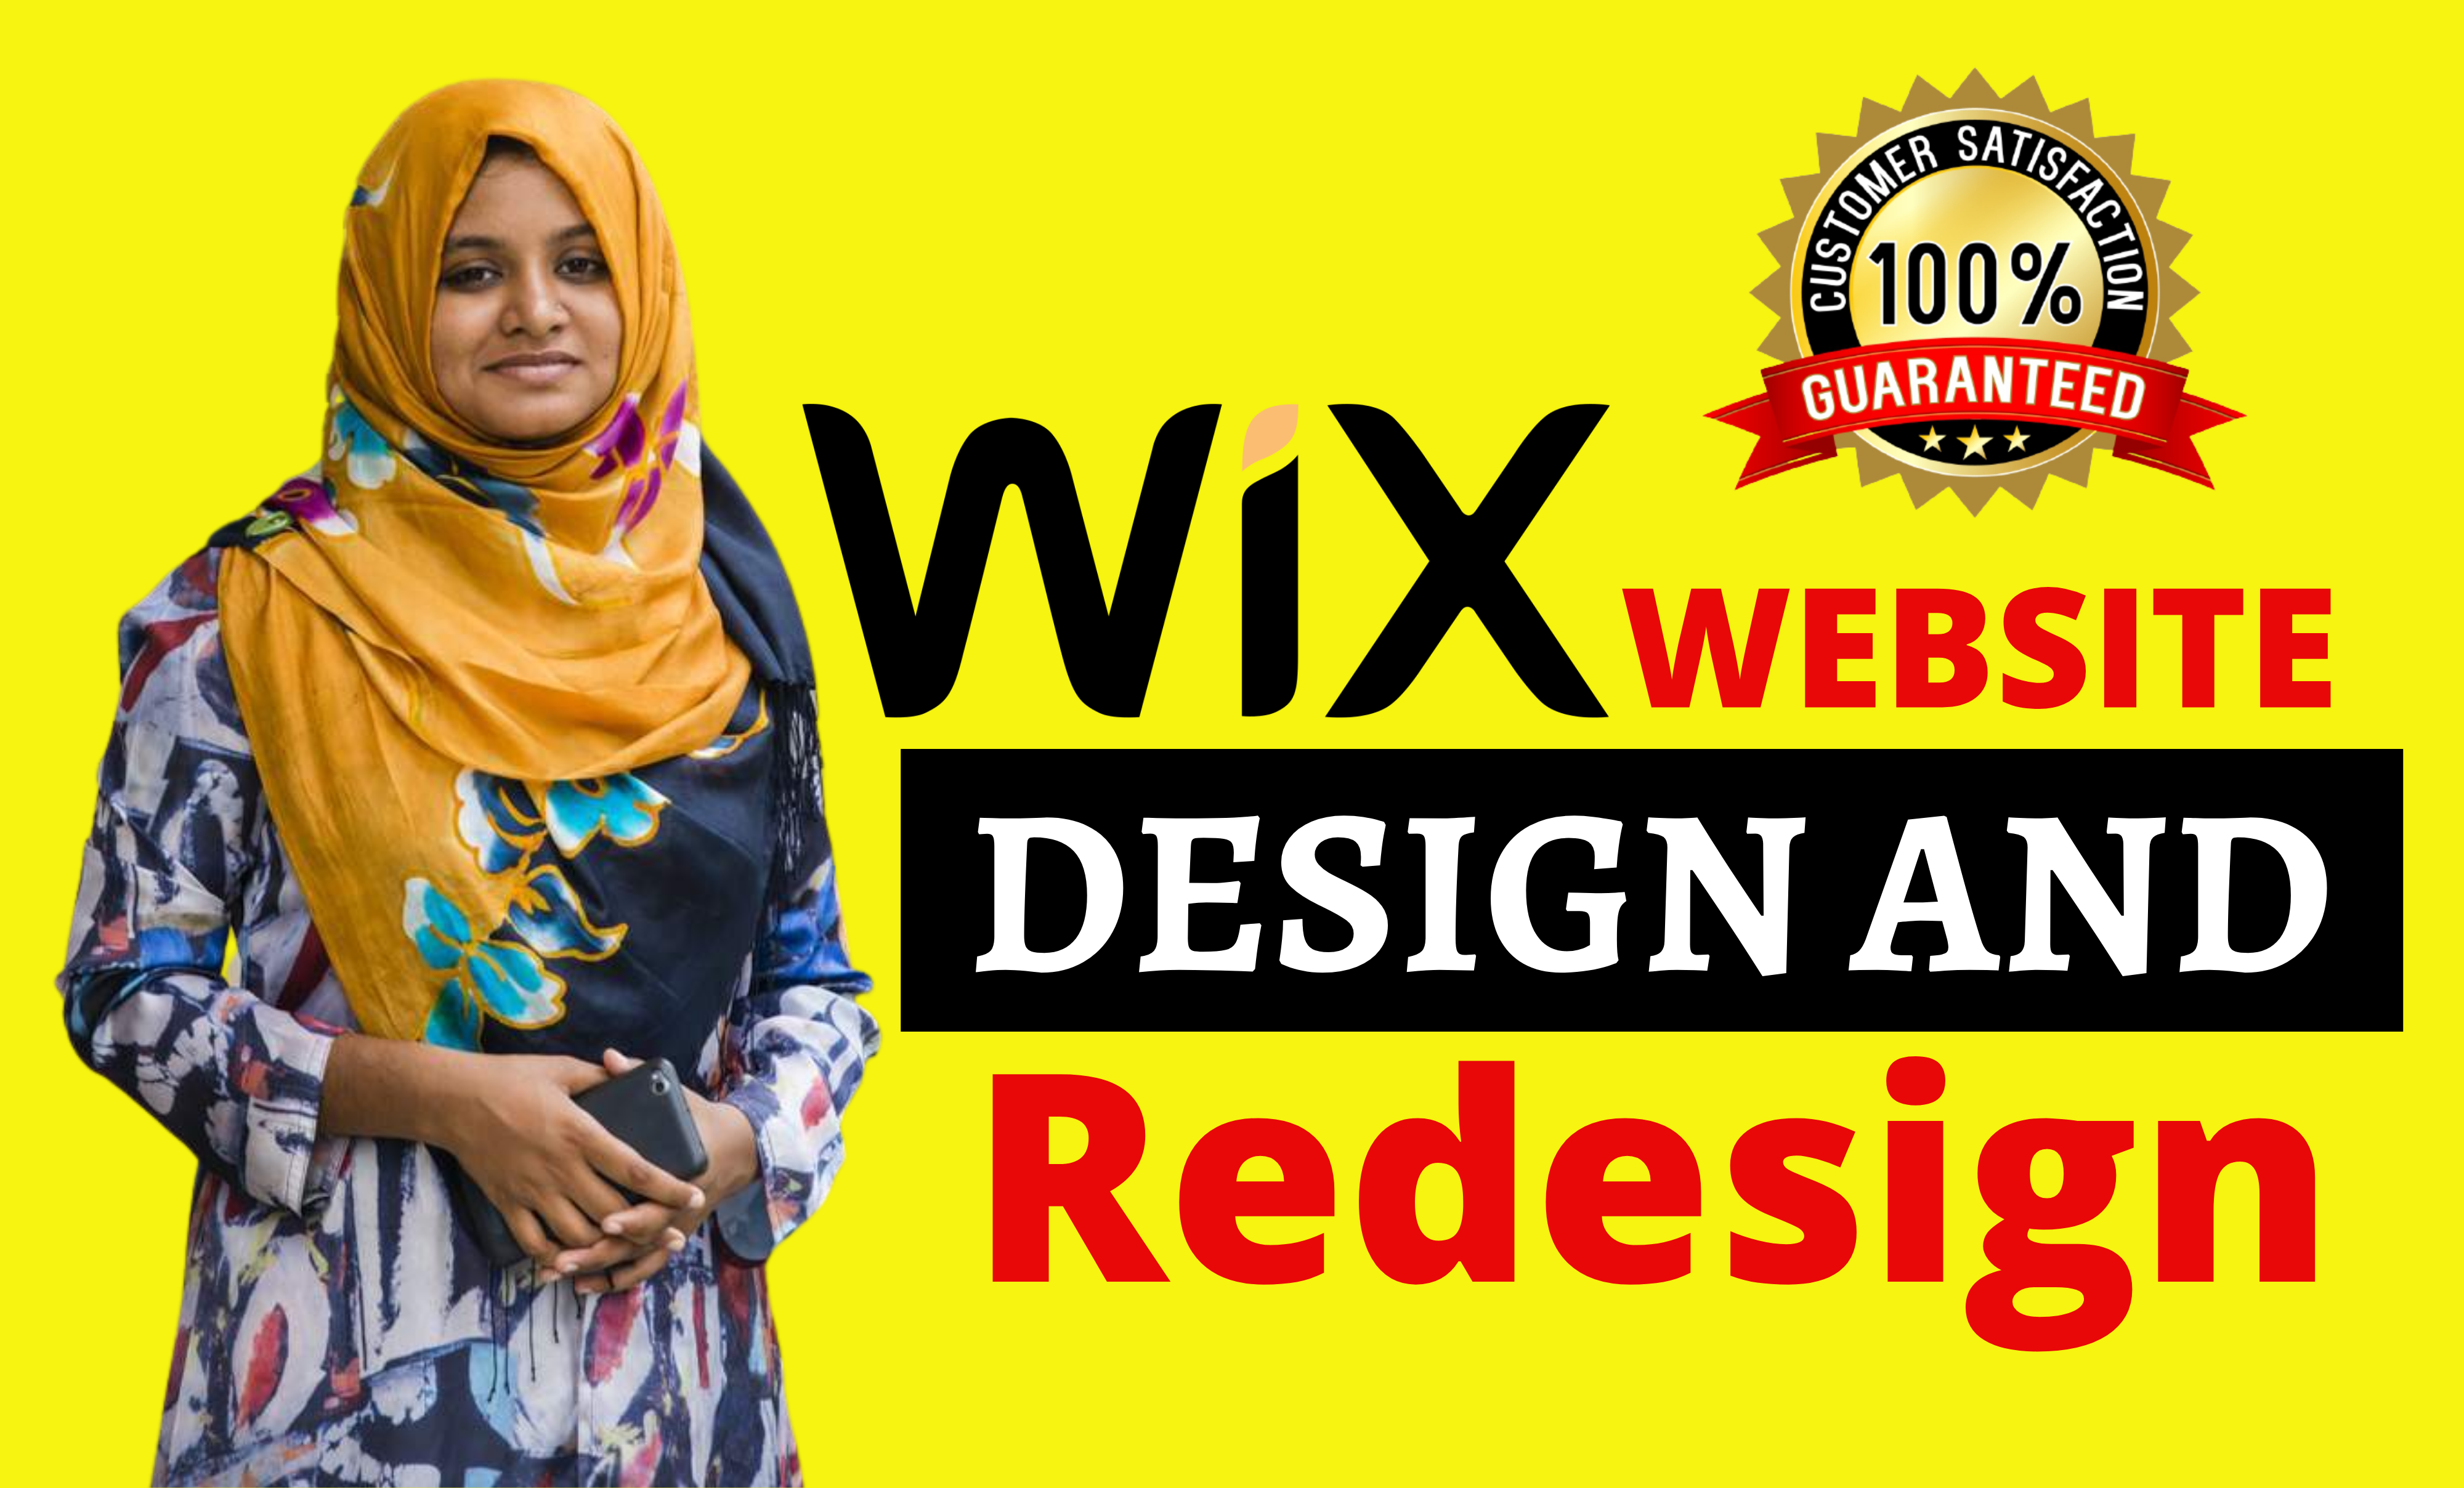 I will do WIX website design and redesign WIX website